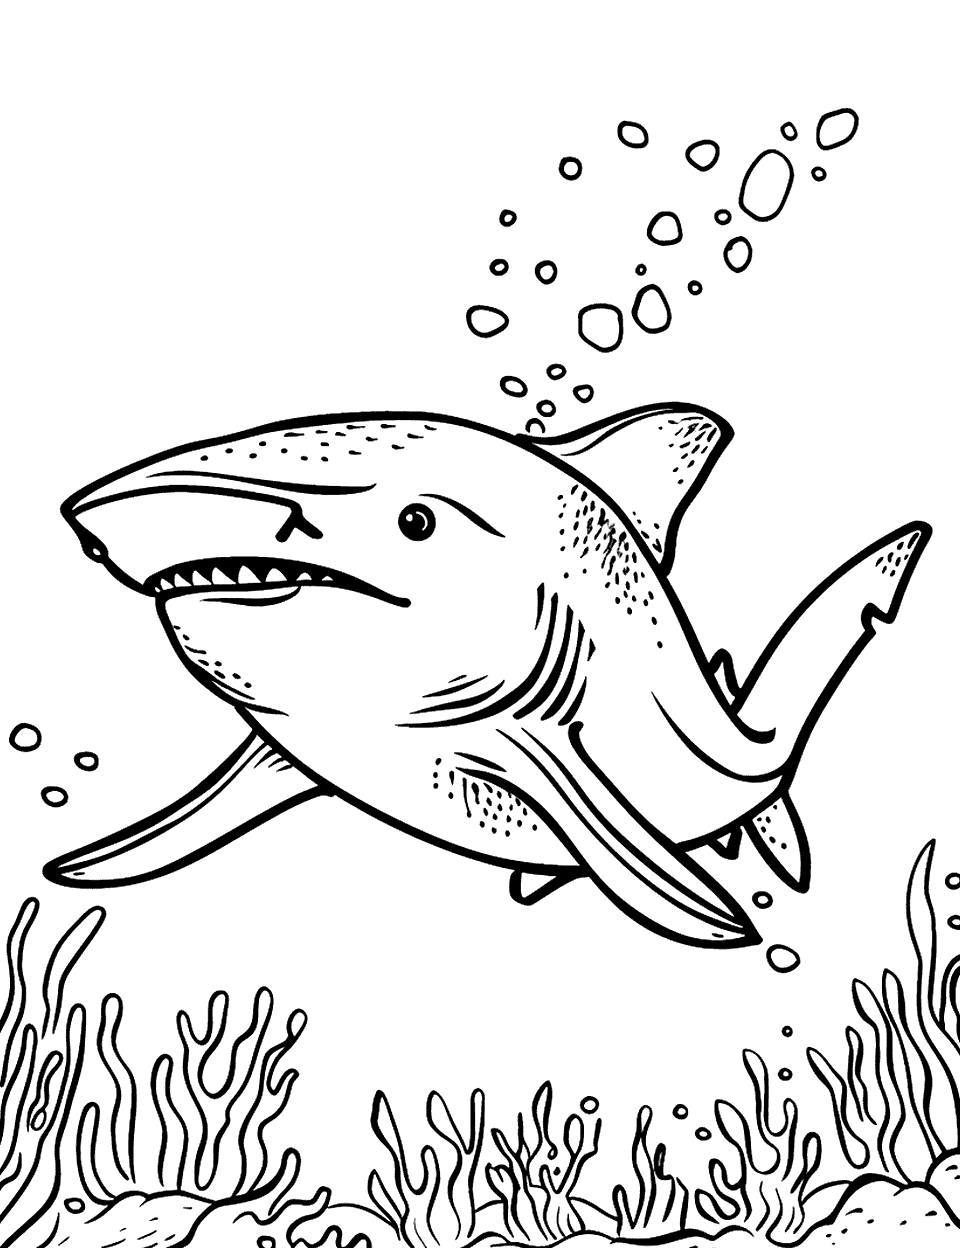 Shark Cruising Underwater Sea Creature Coloring Page - A sleek shark swimming in the deep sea.